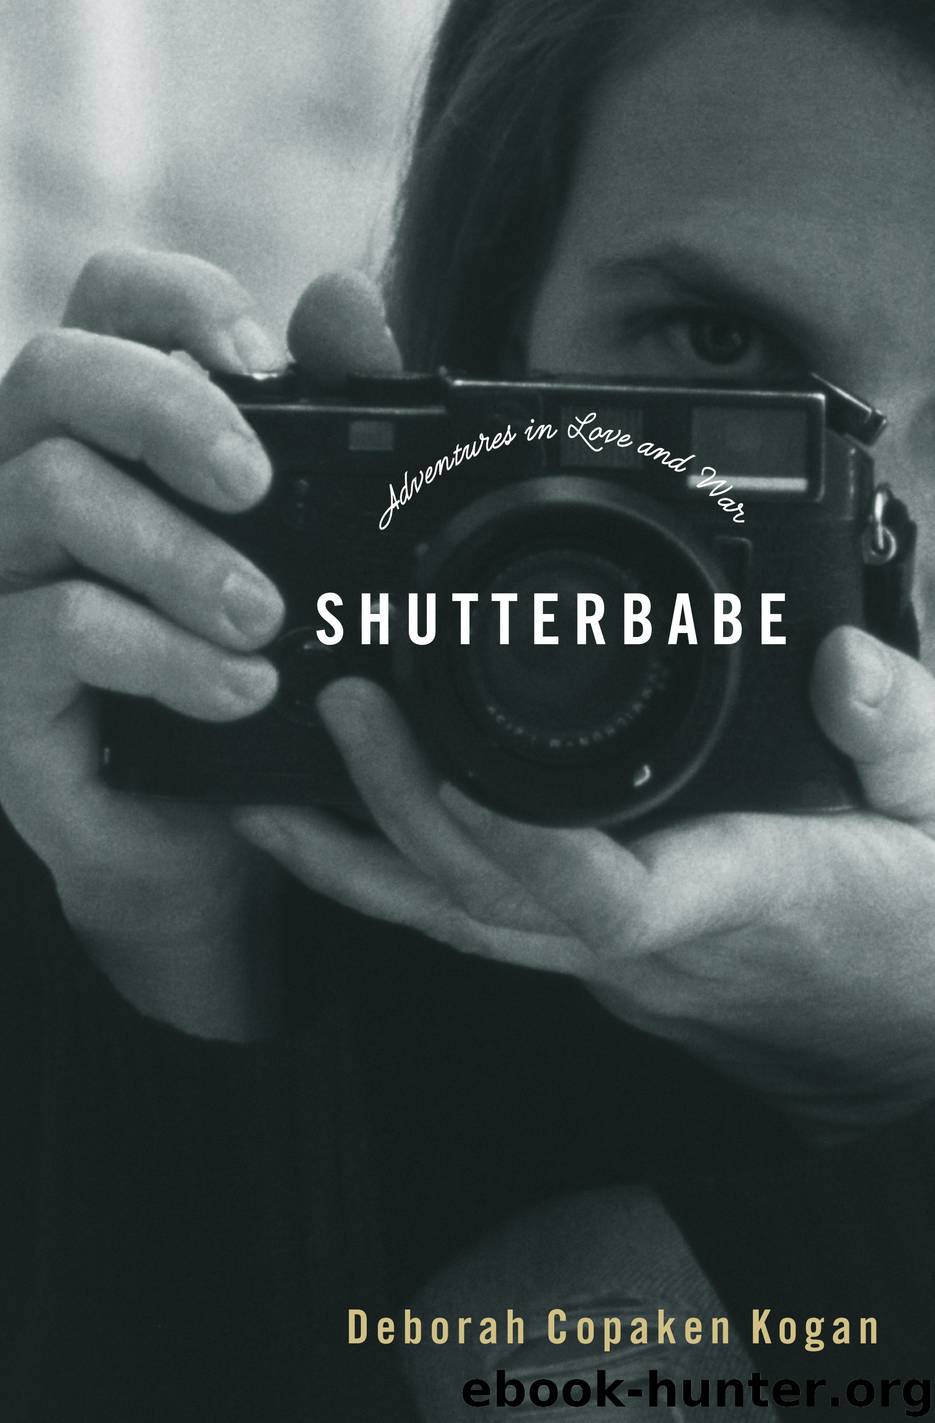 Shutterbabe by Deborah Copaken Kogan